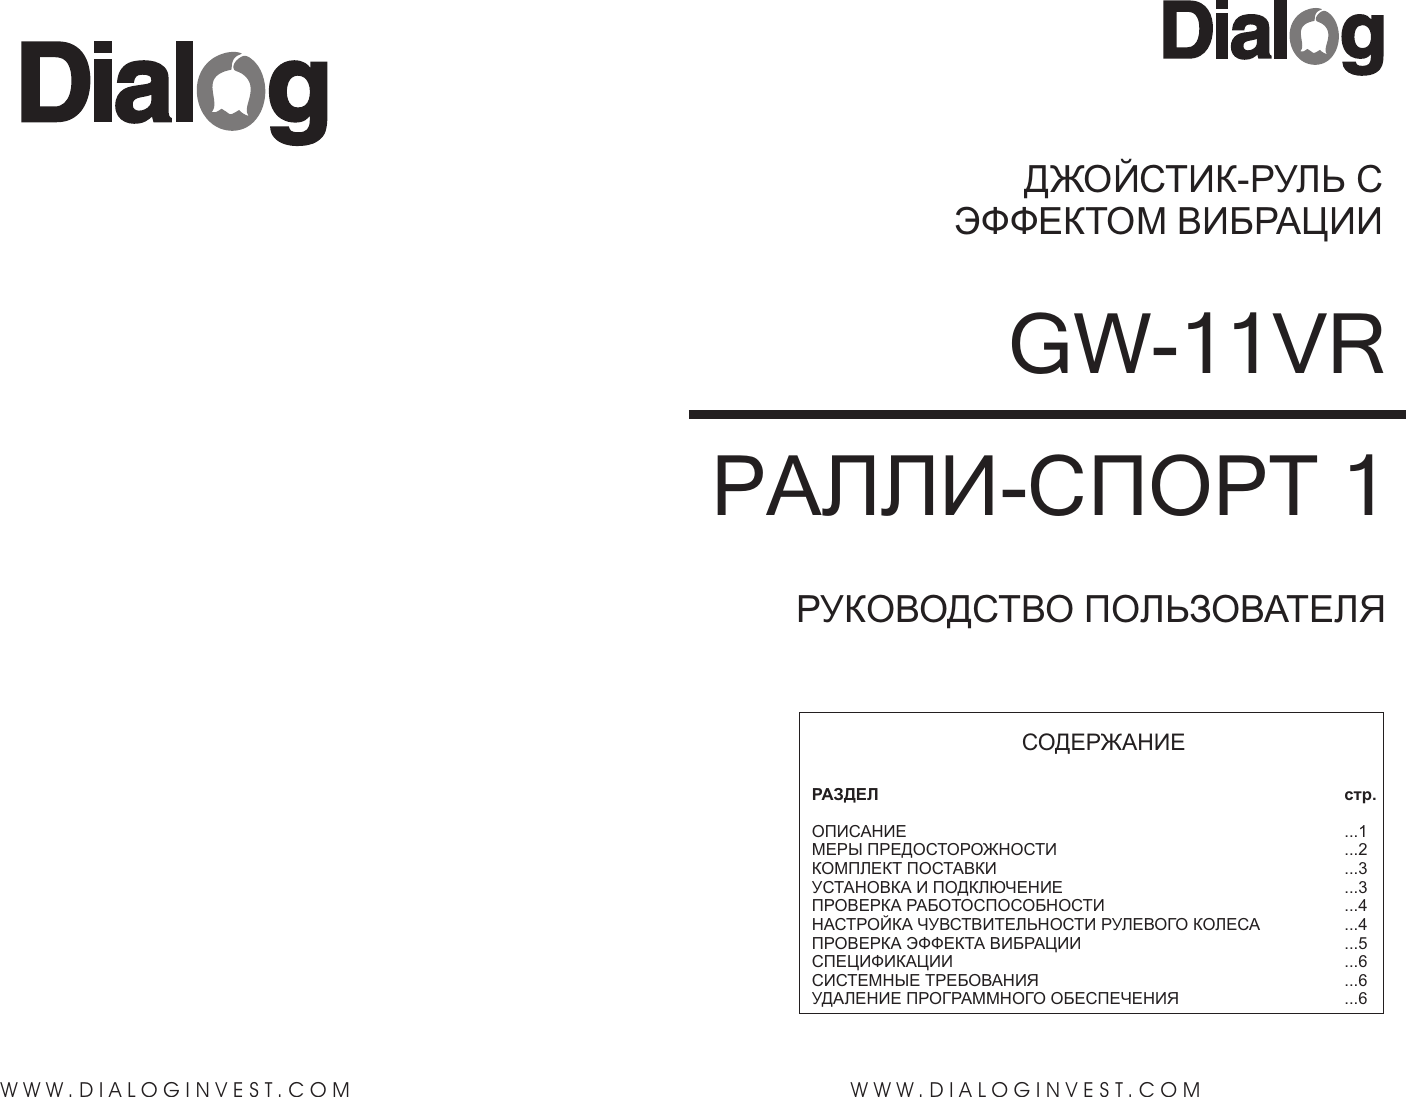 Dialog 11vr. GW VR 11 Rally Sport. Инструкция руля dialog. Dialog GW-11vr. Диалог pdf.